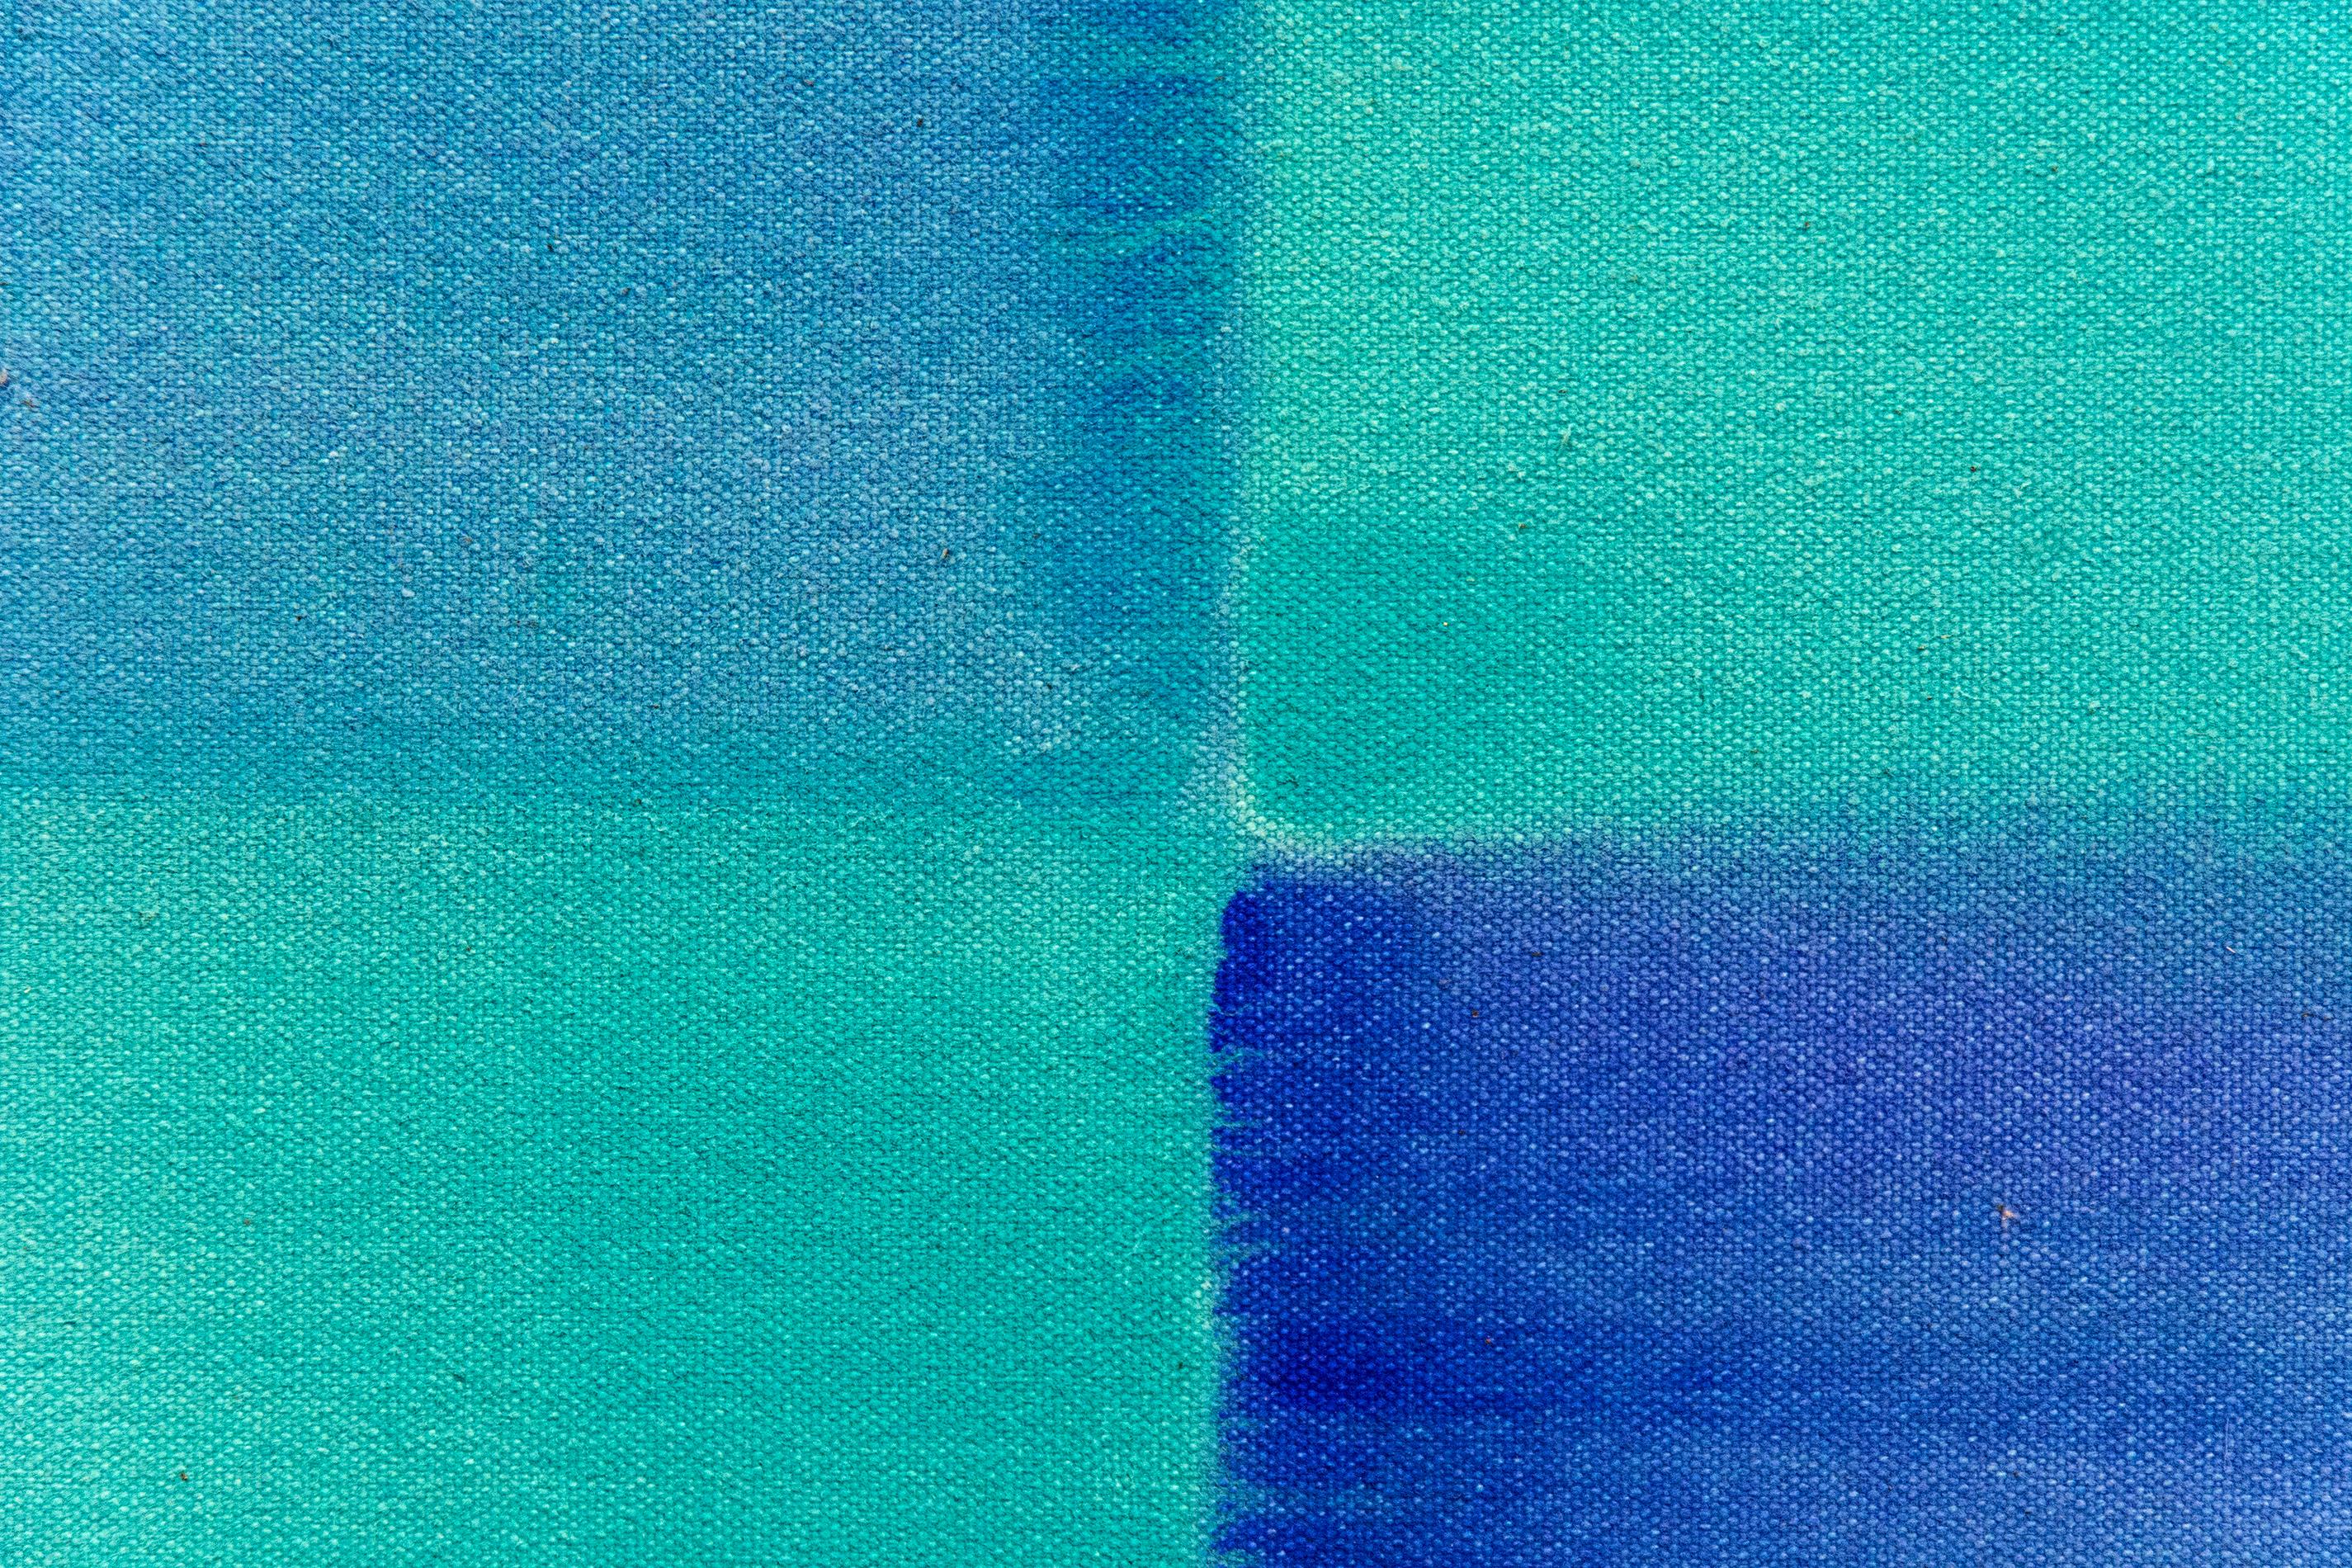 Damselfly - blue, teal, abstract, geometric composition, acrylic on canvas 2